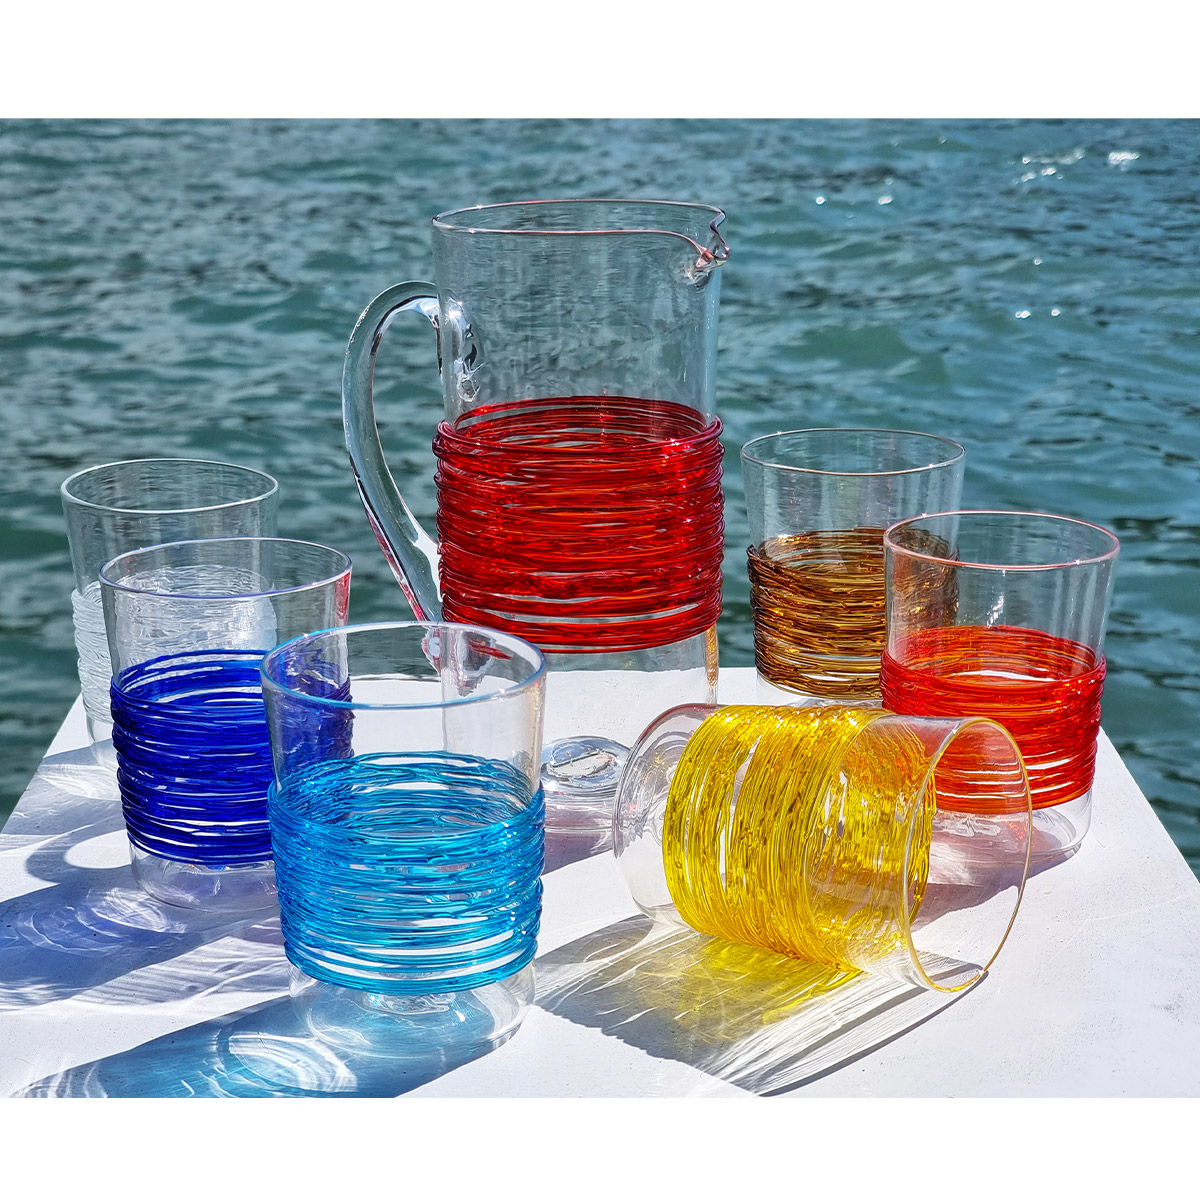 https://www.originalmuranoglass.com/images/stories/virtuemart/product/multicolor_strip_glasses_original_murano_glass_omg6.jpg